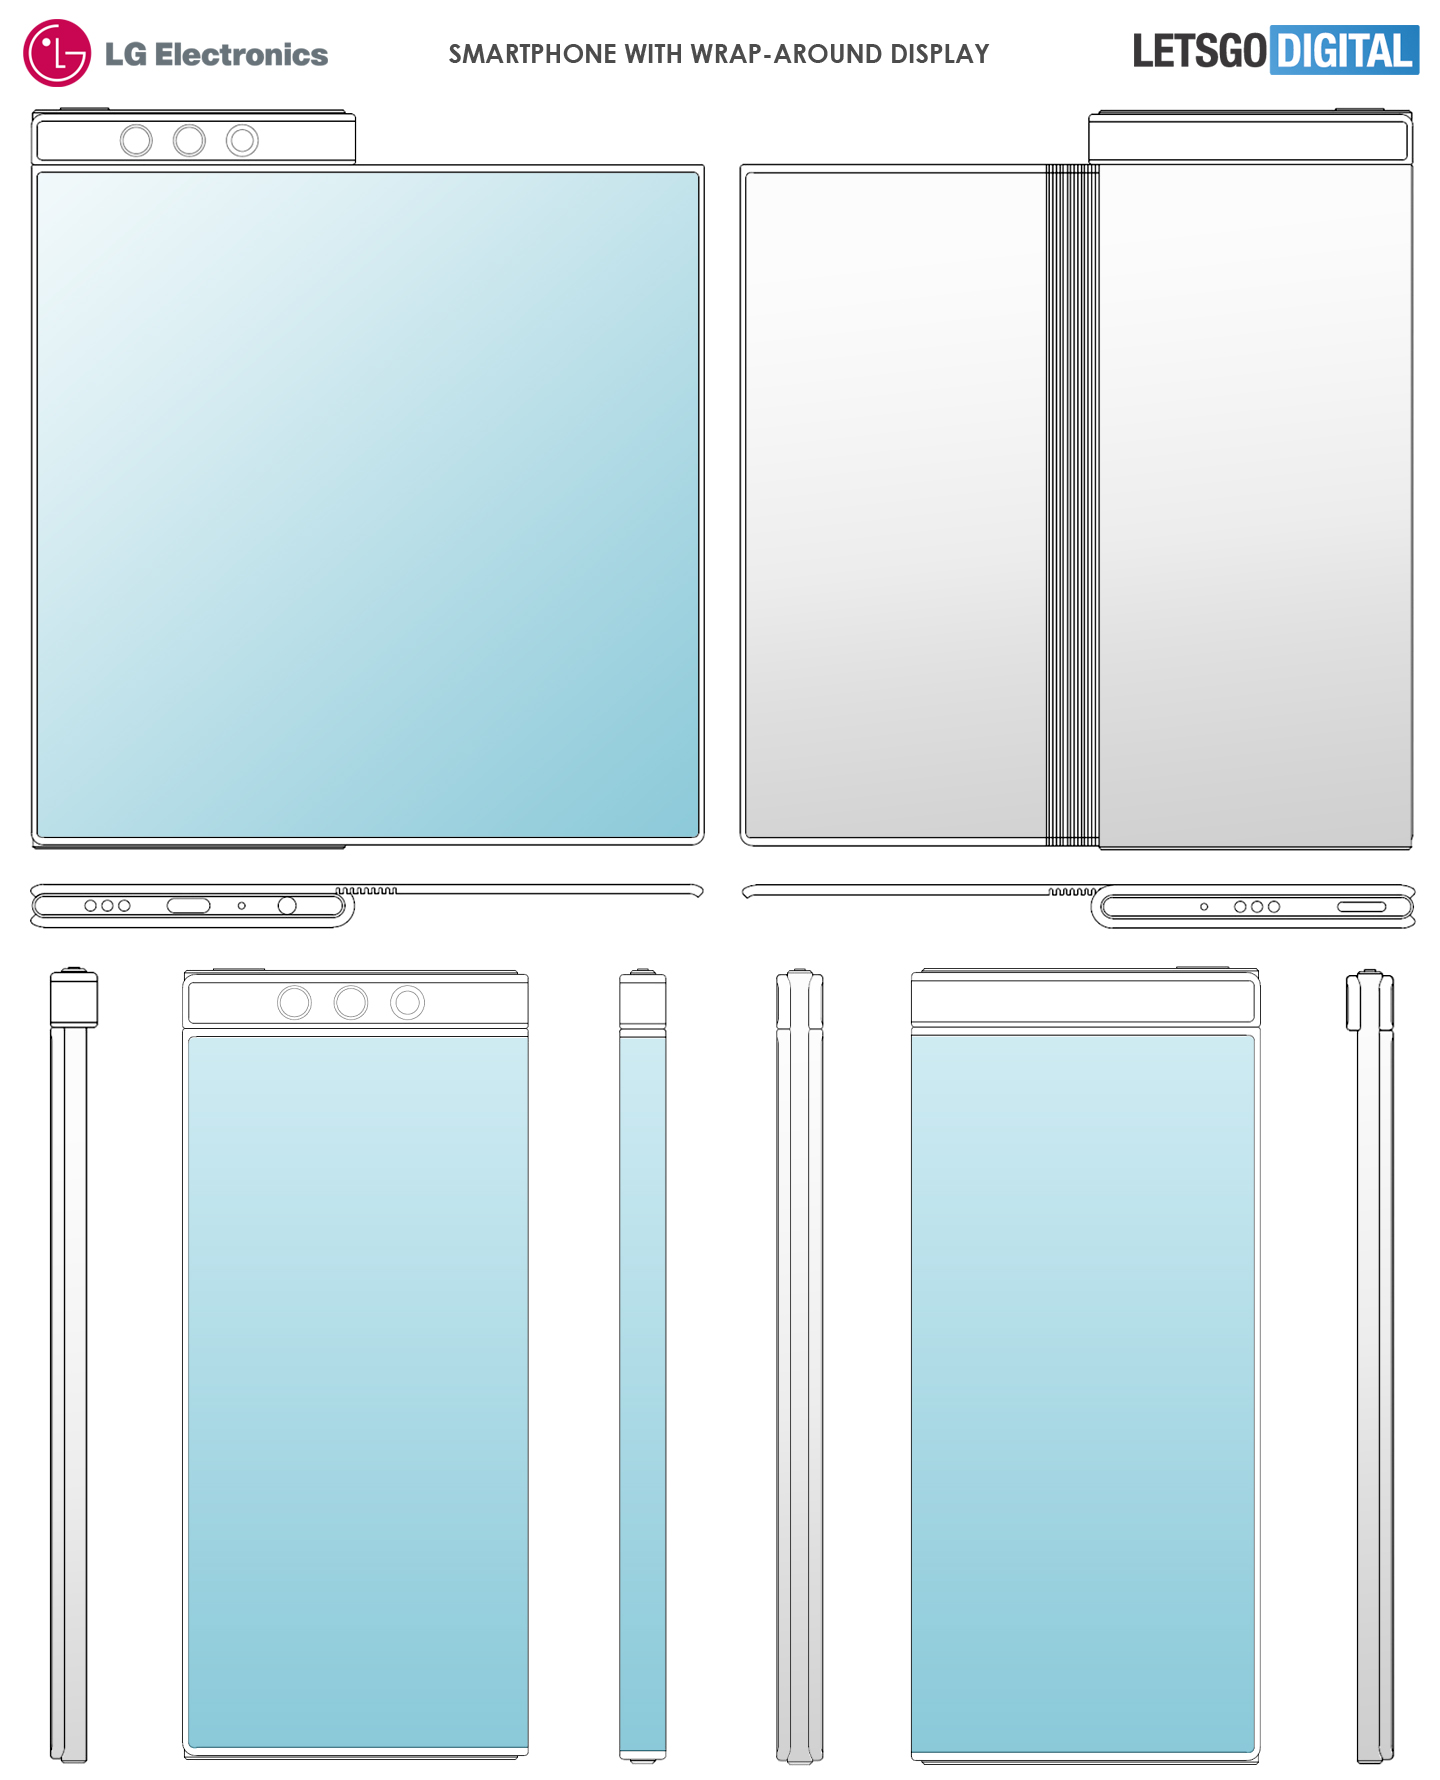 LG Wrap-Around Display Smartphone Patent